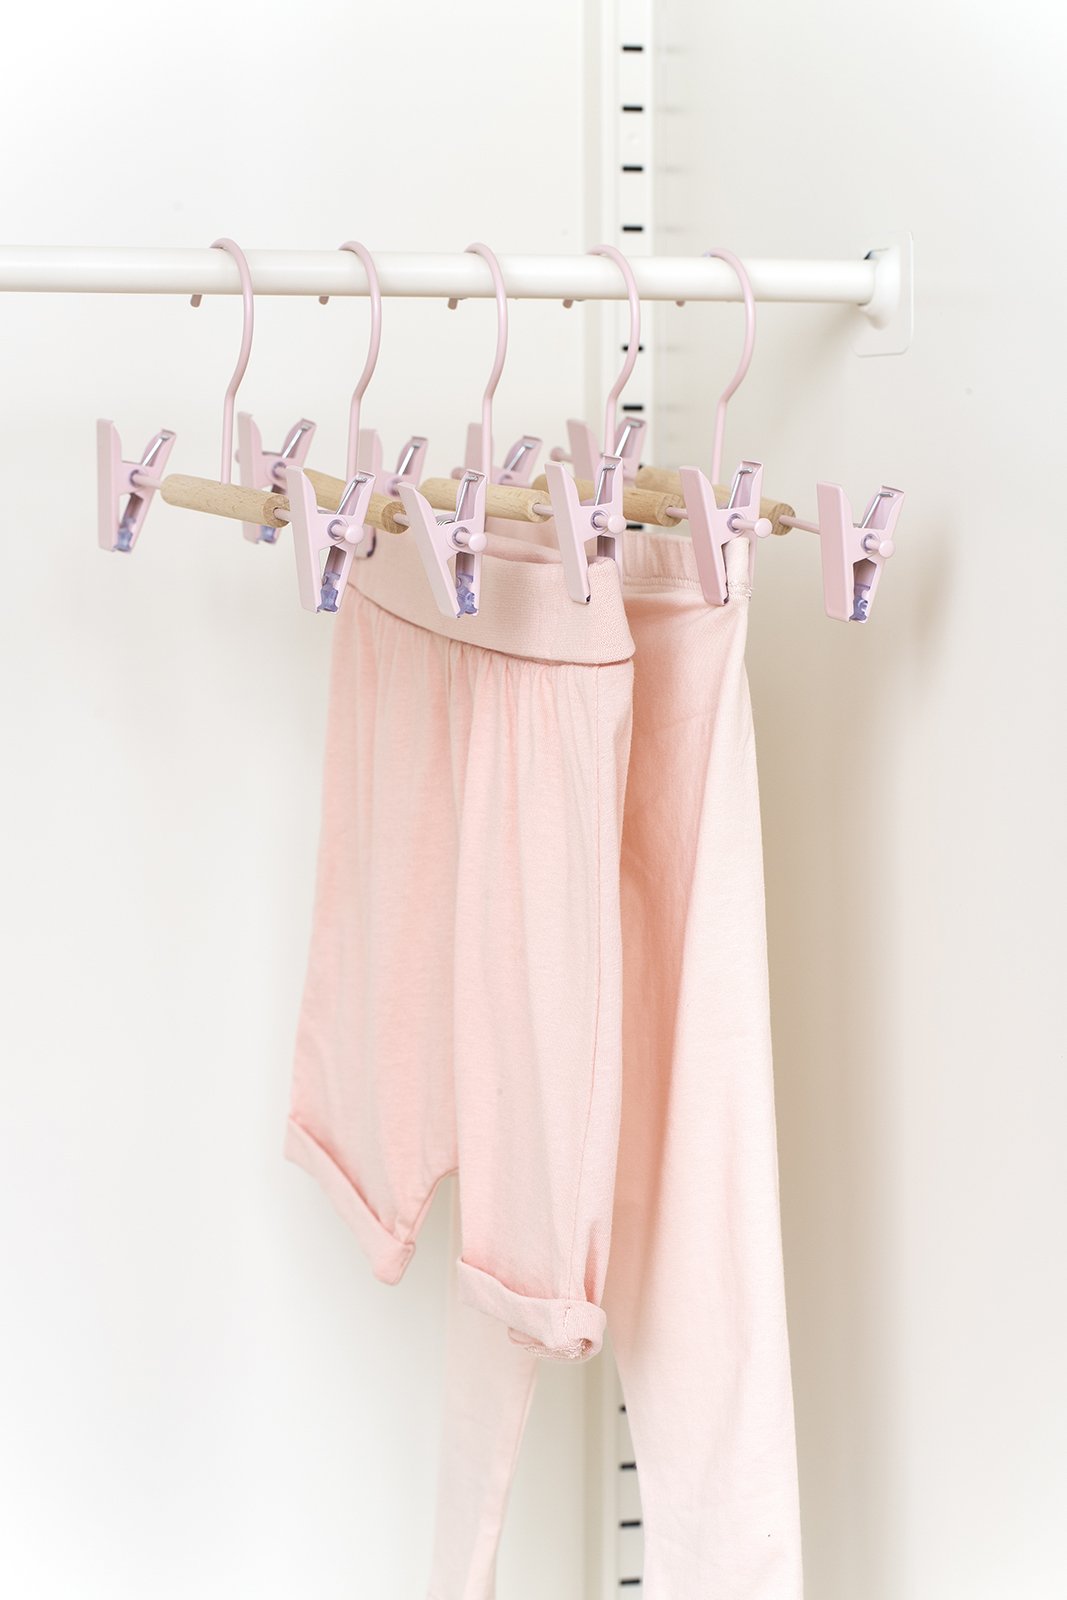 Kids Clip Hangers In Blush